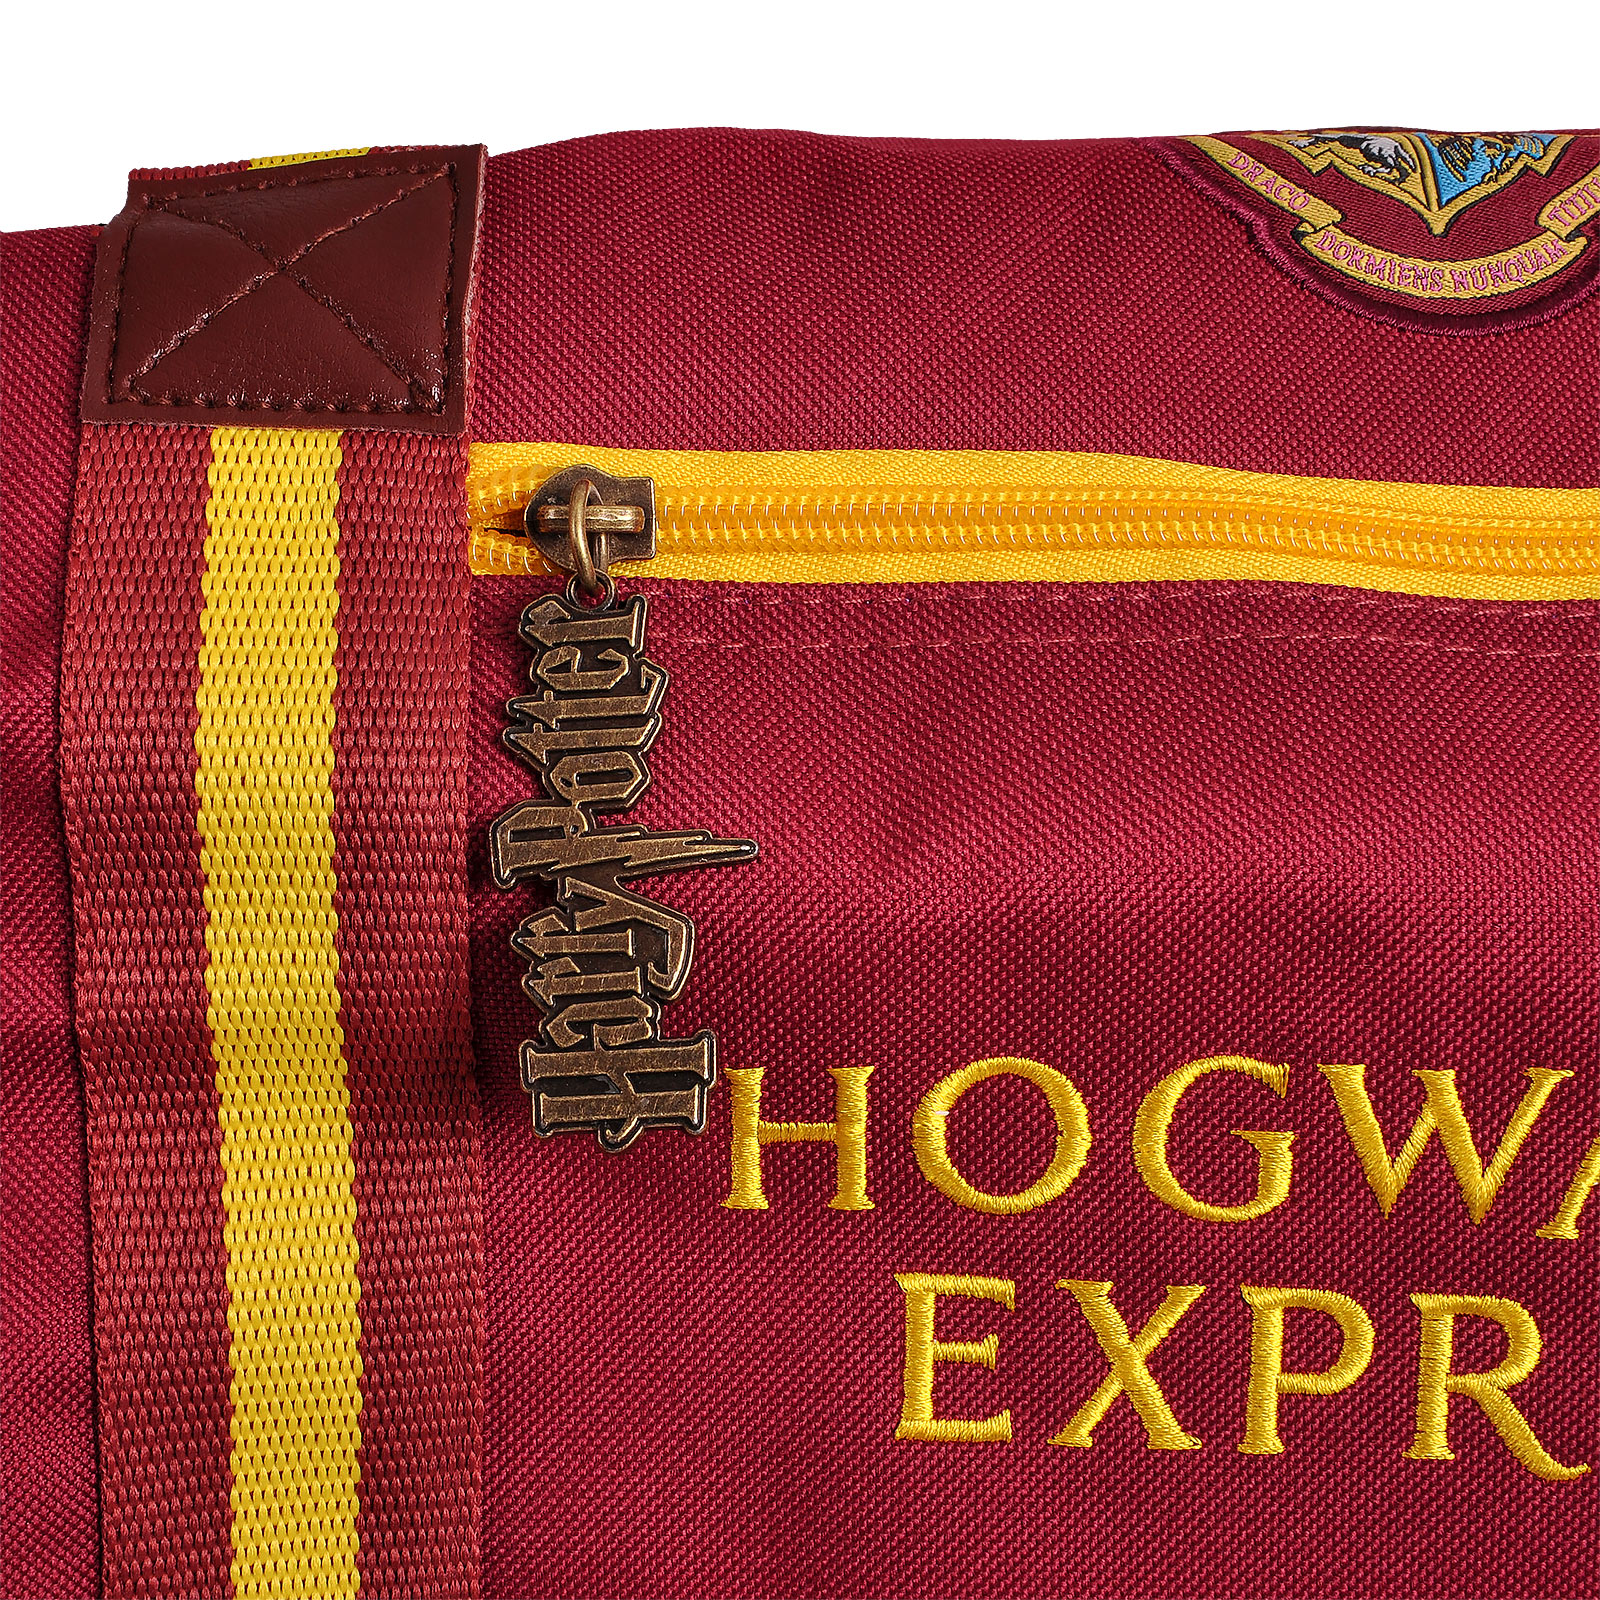 Harry Potter - Hogwarts Express 9 3/4 Reisetasche